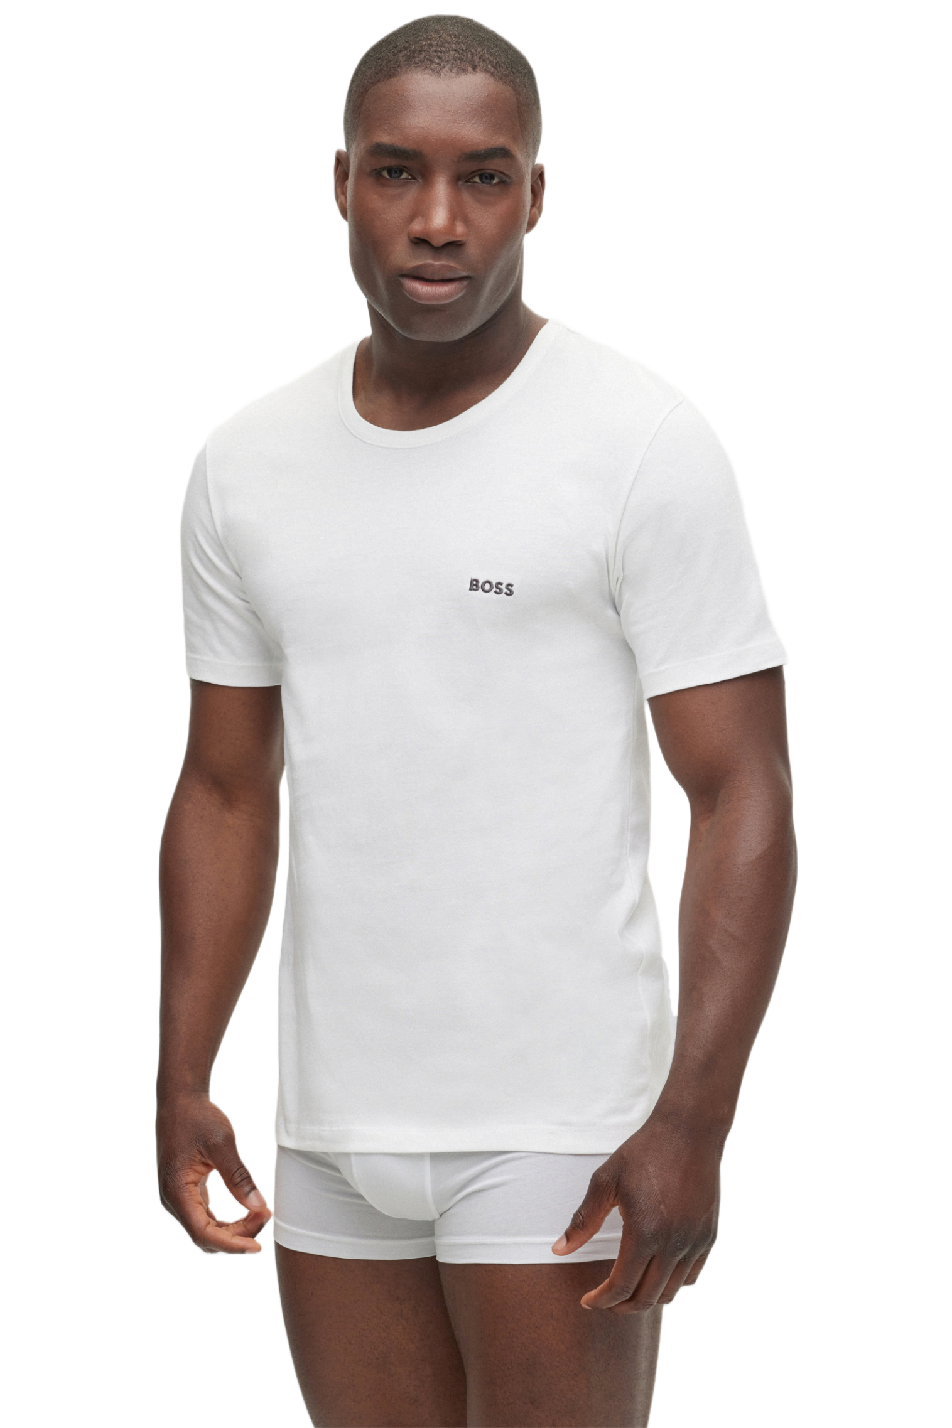 Boss 3 Pack Men's Classic T-Shirt